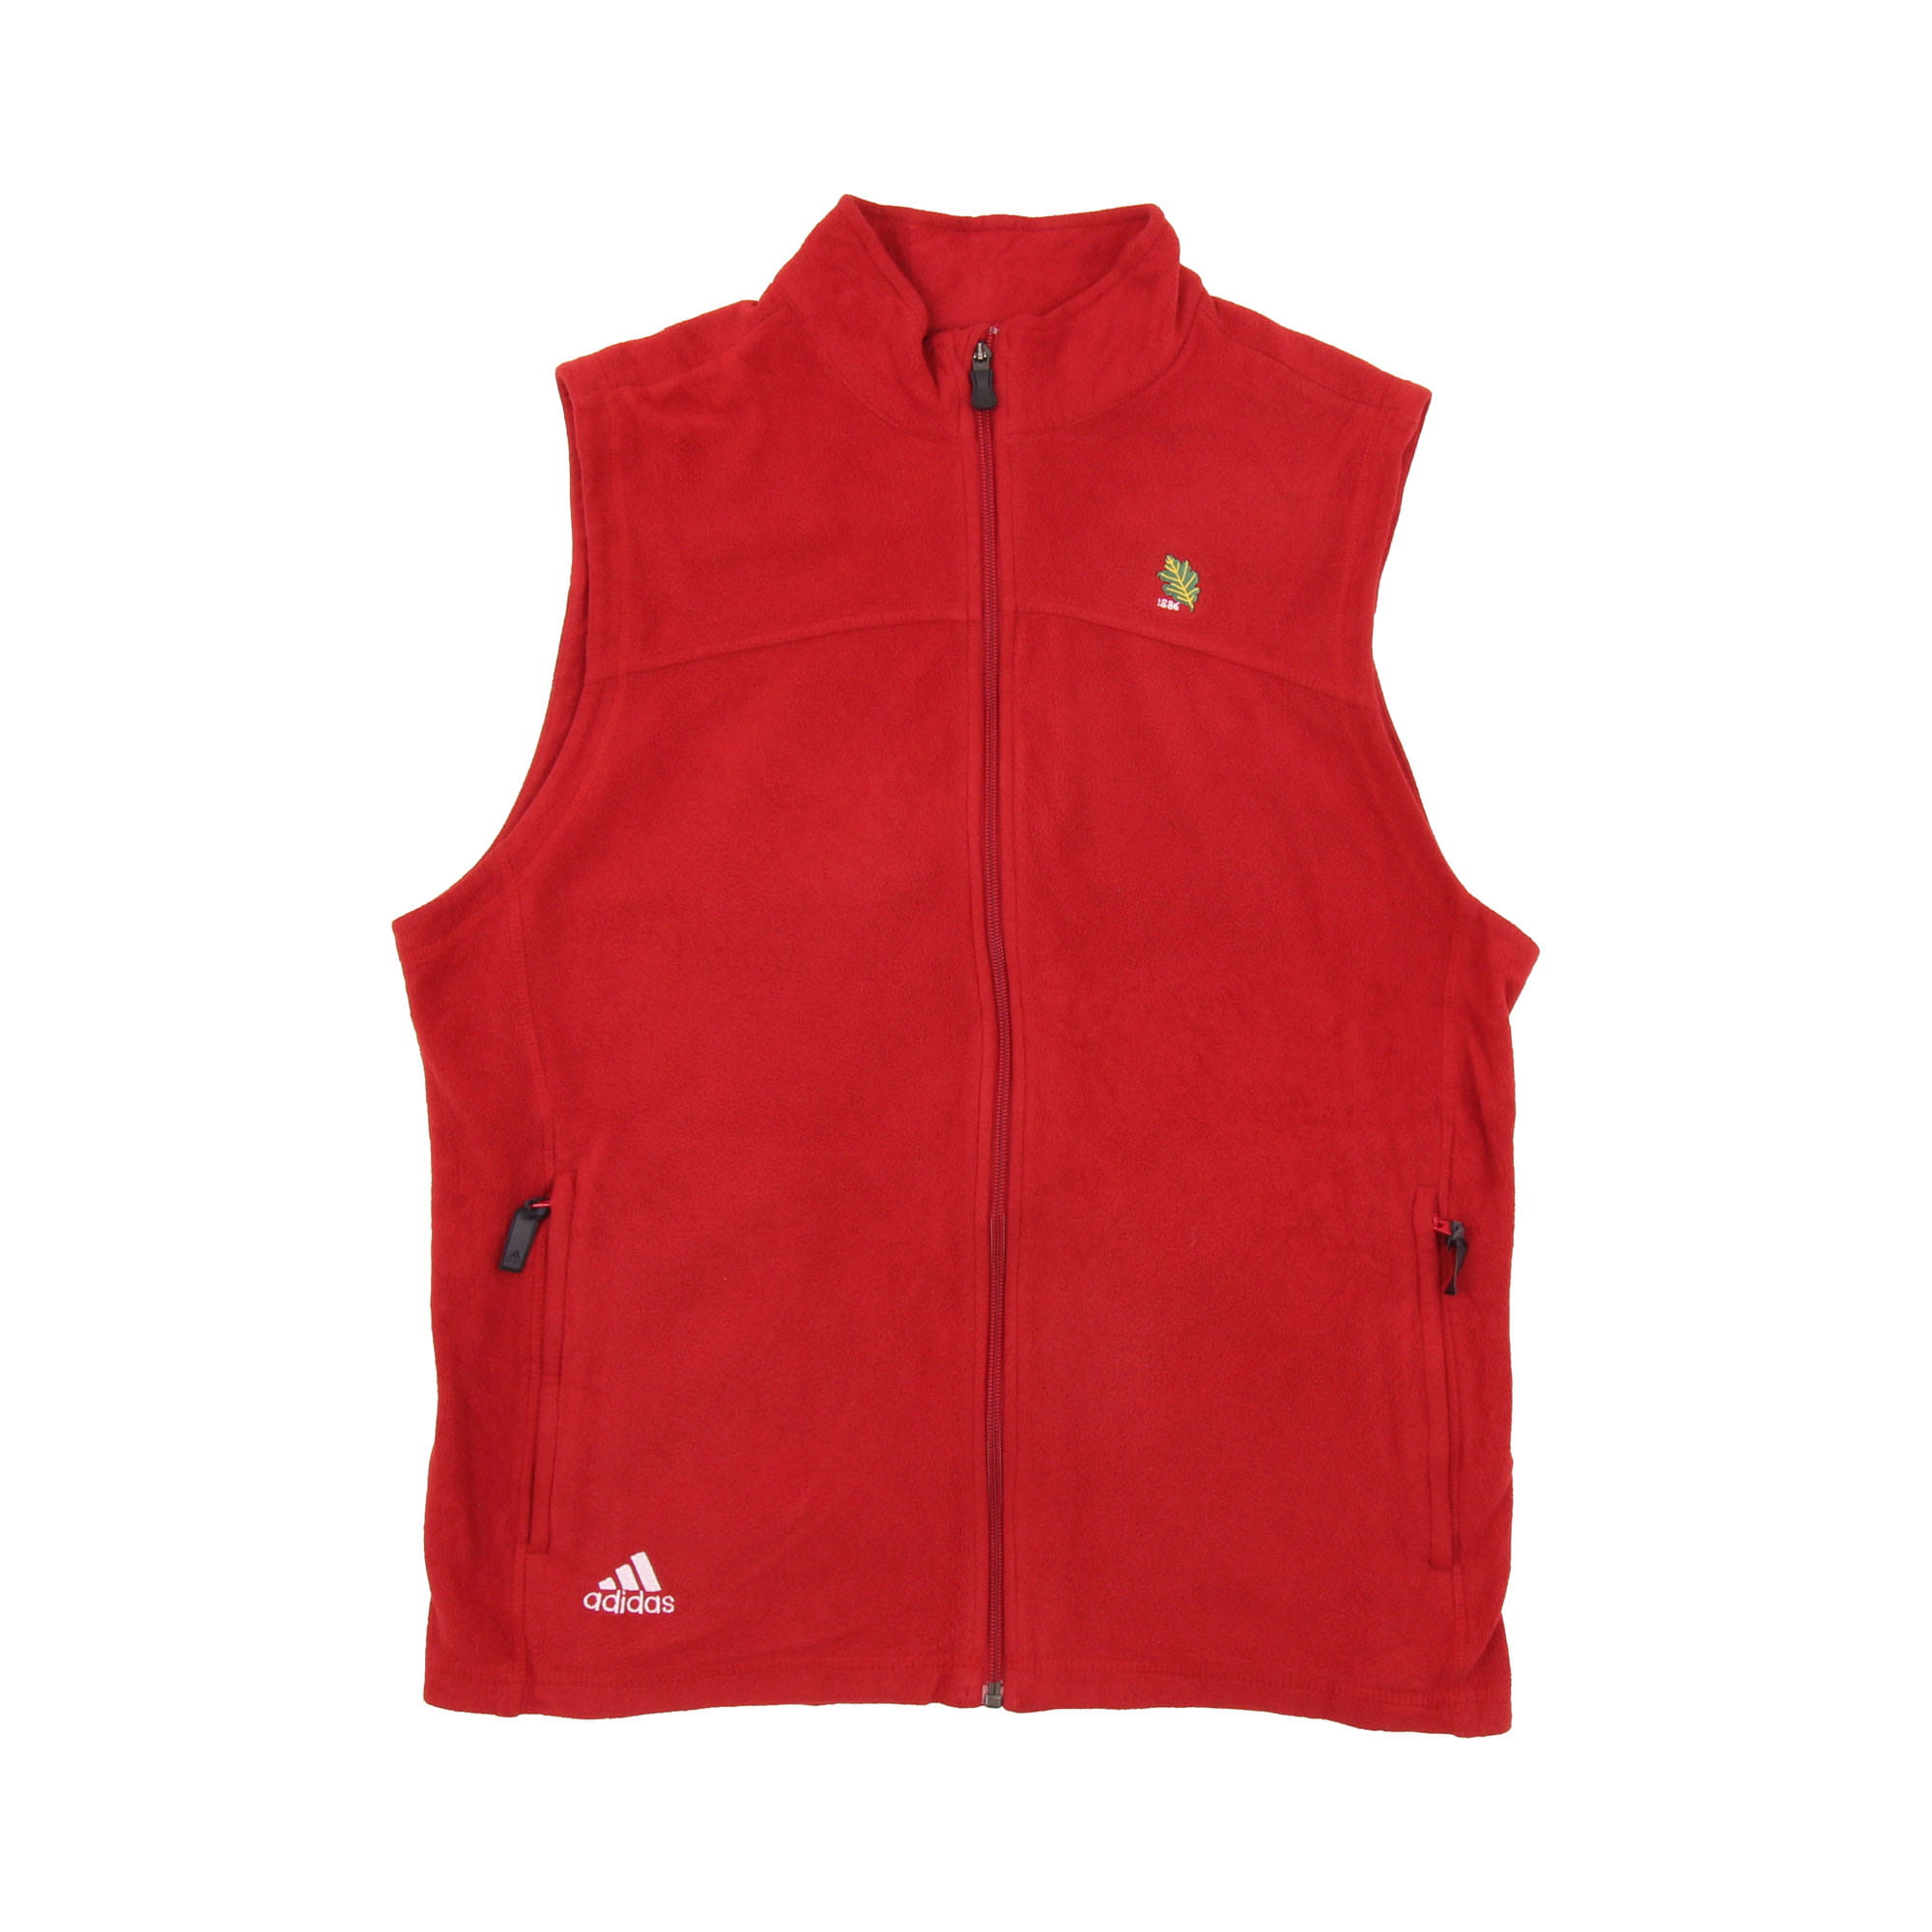 Adidas Gilet Fleece Red -  M